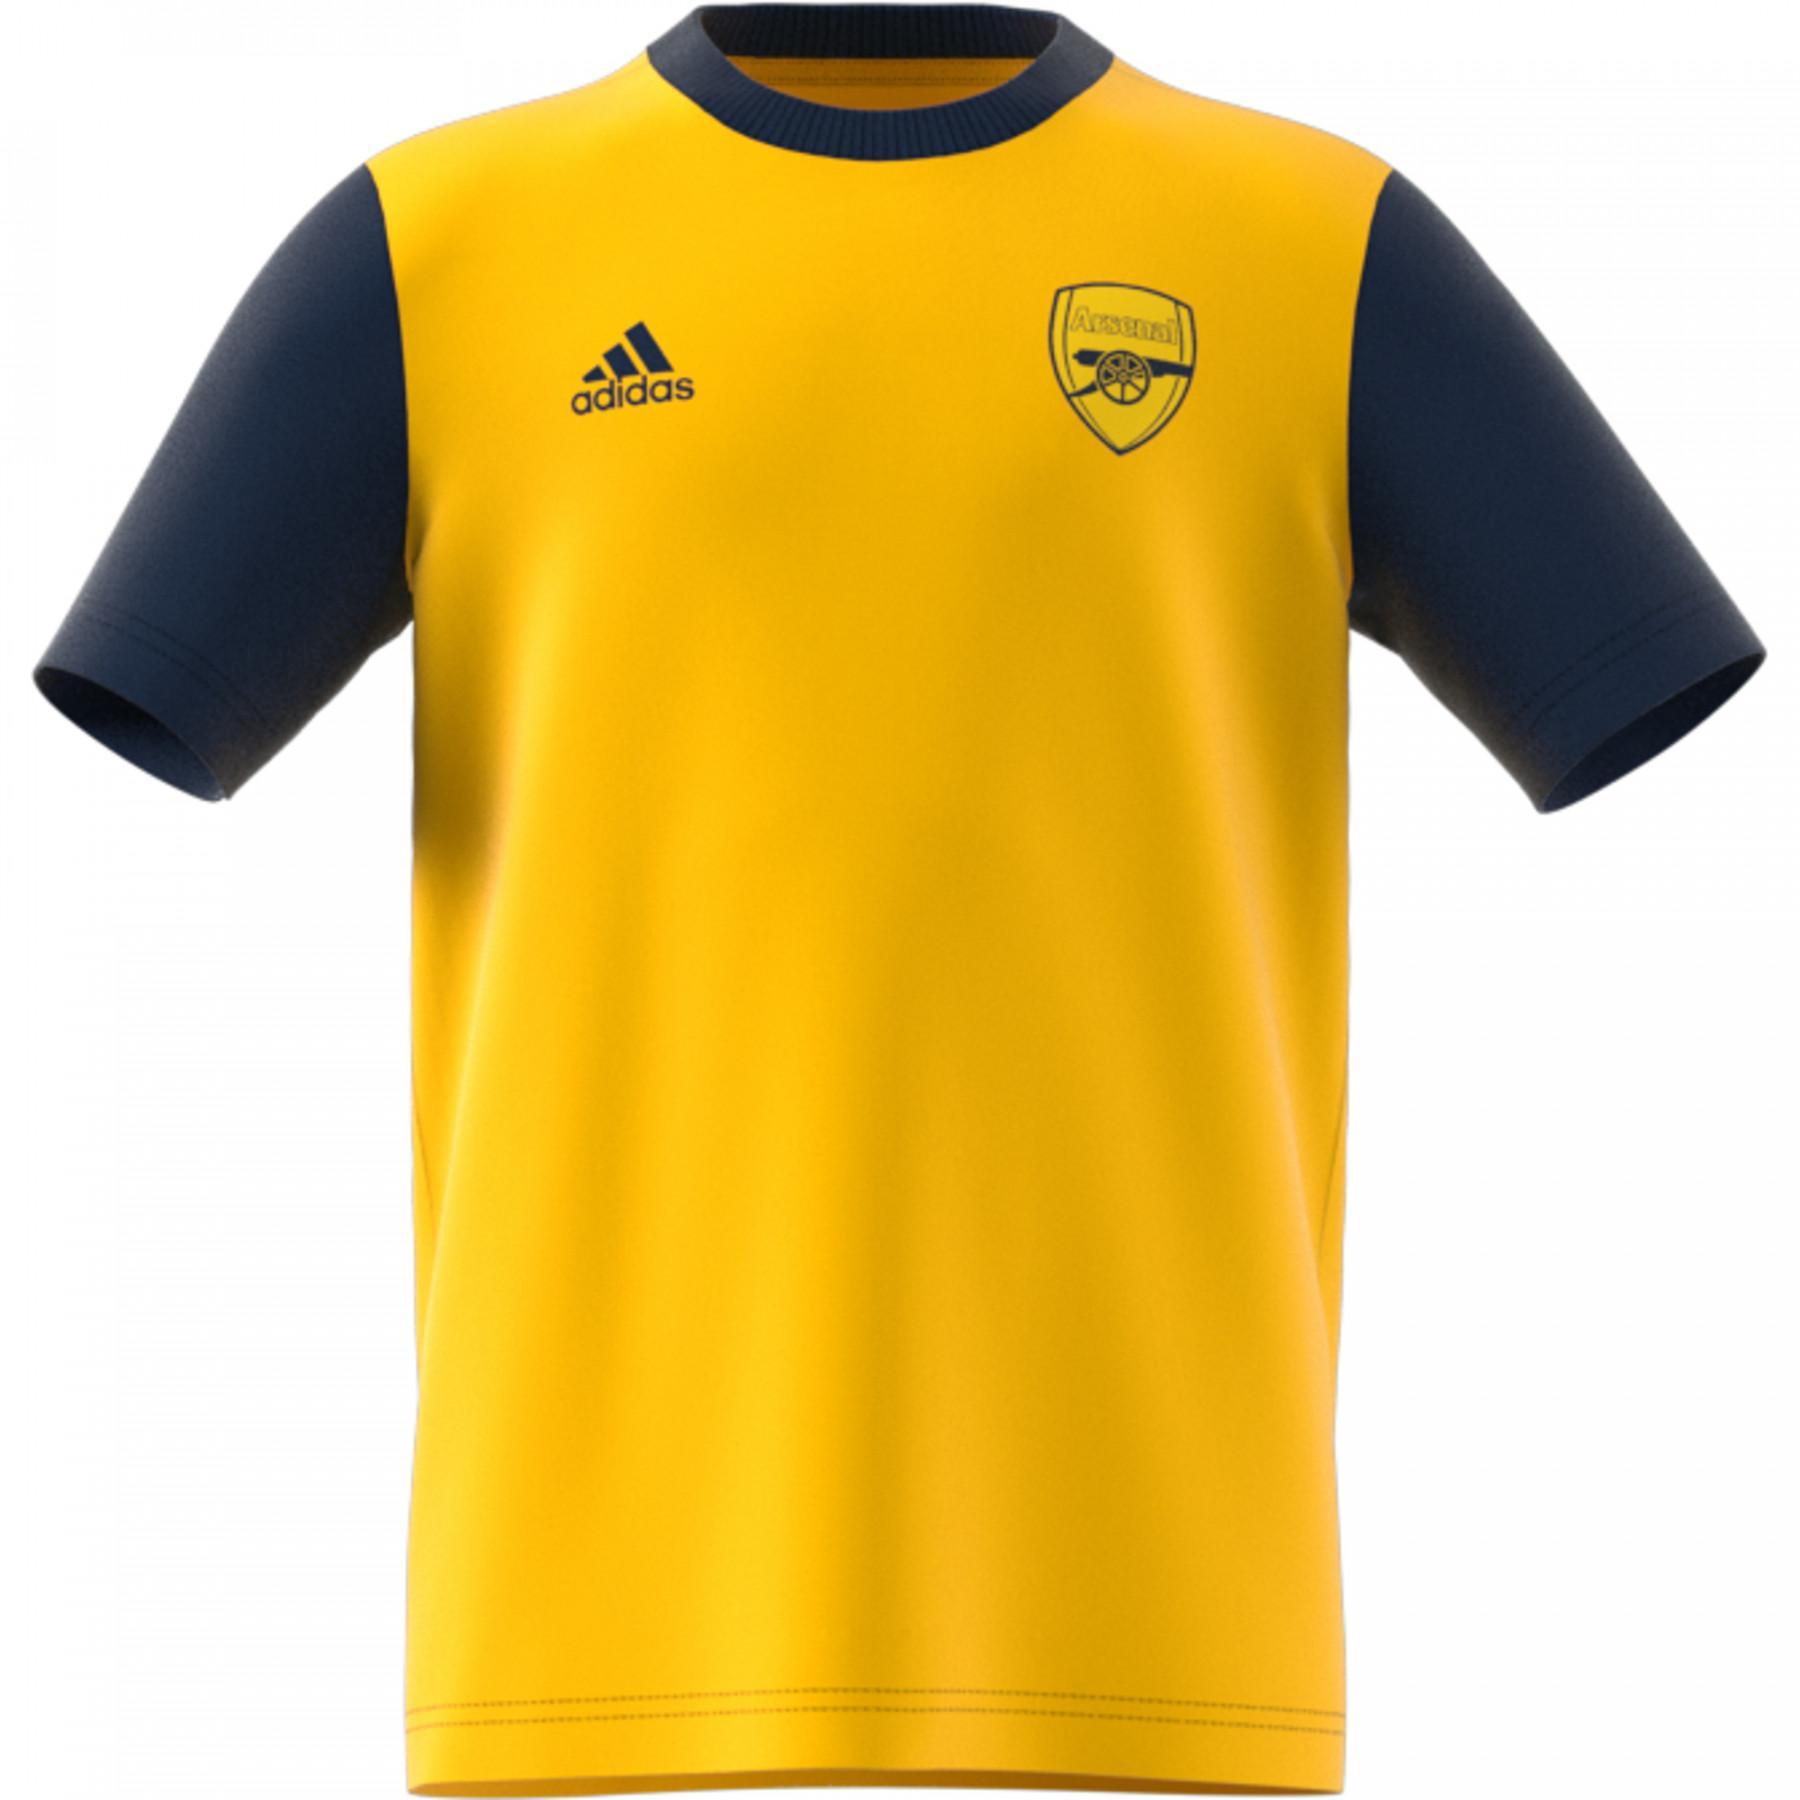 Koszulka dziecięca Arsenal